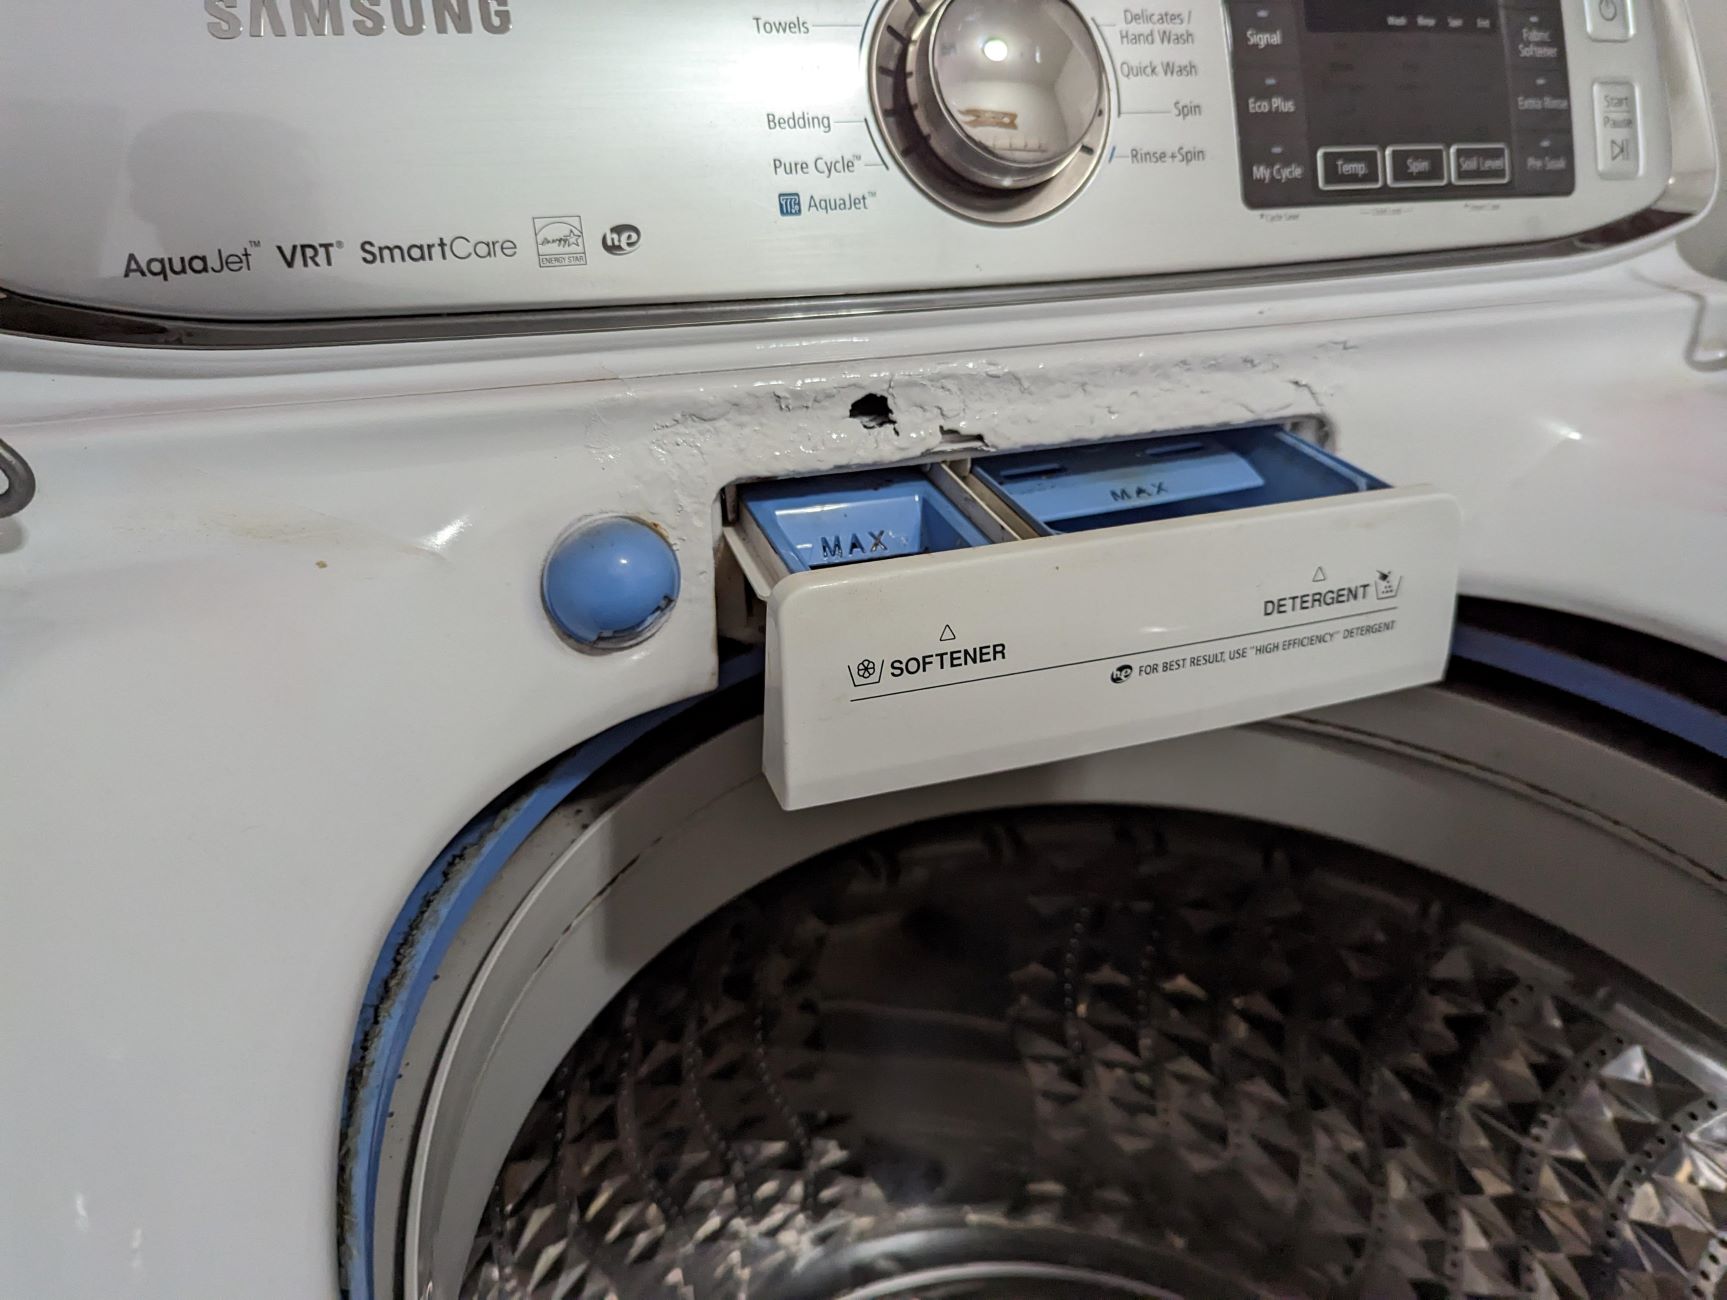 What Does 4C Mean In Samsung Washing Machine